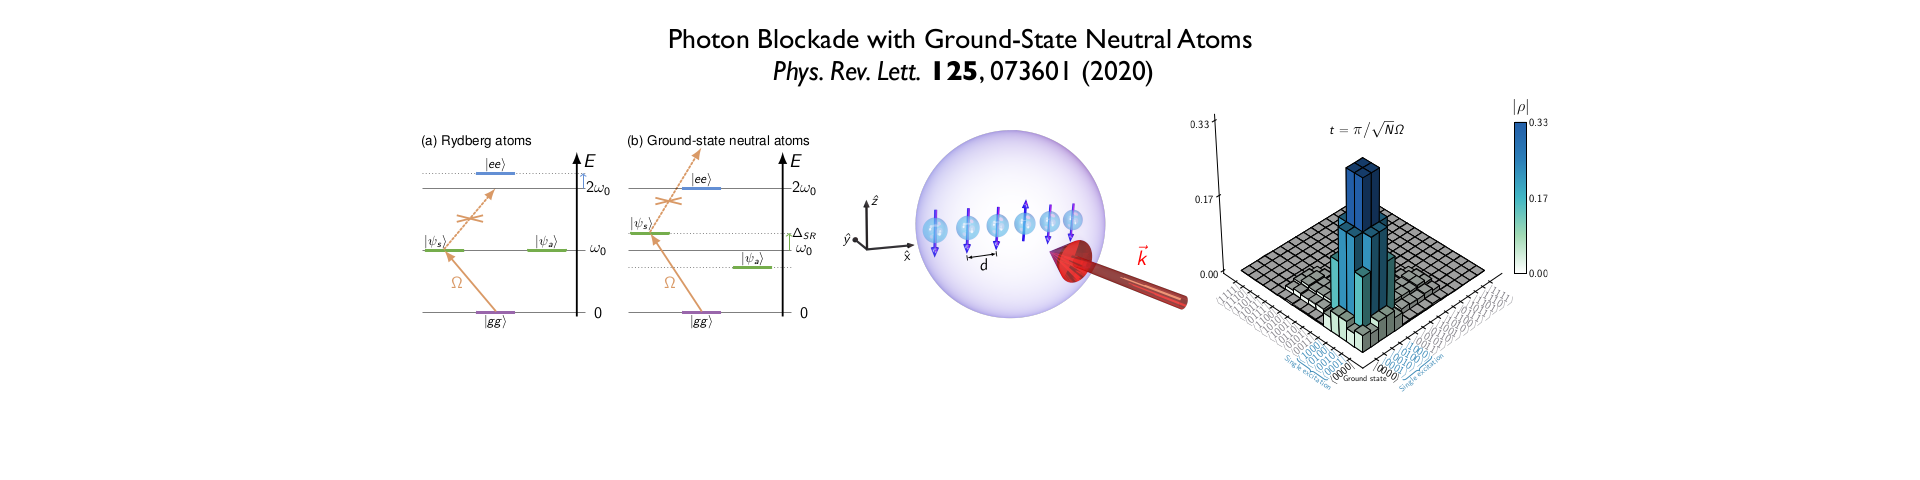 Photon Blockade with Ground-State Neutral Atoms